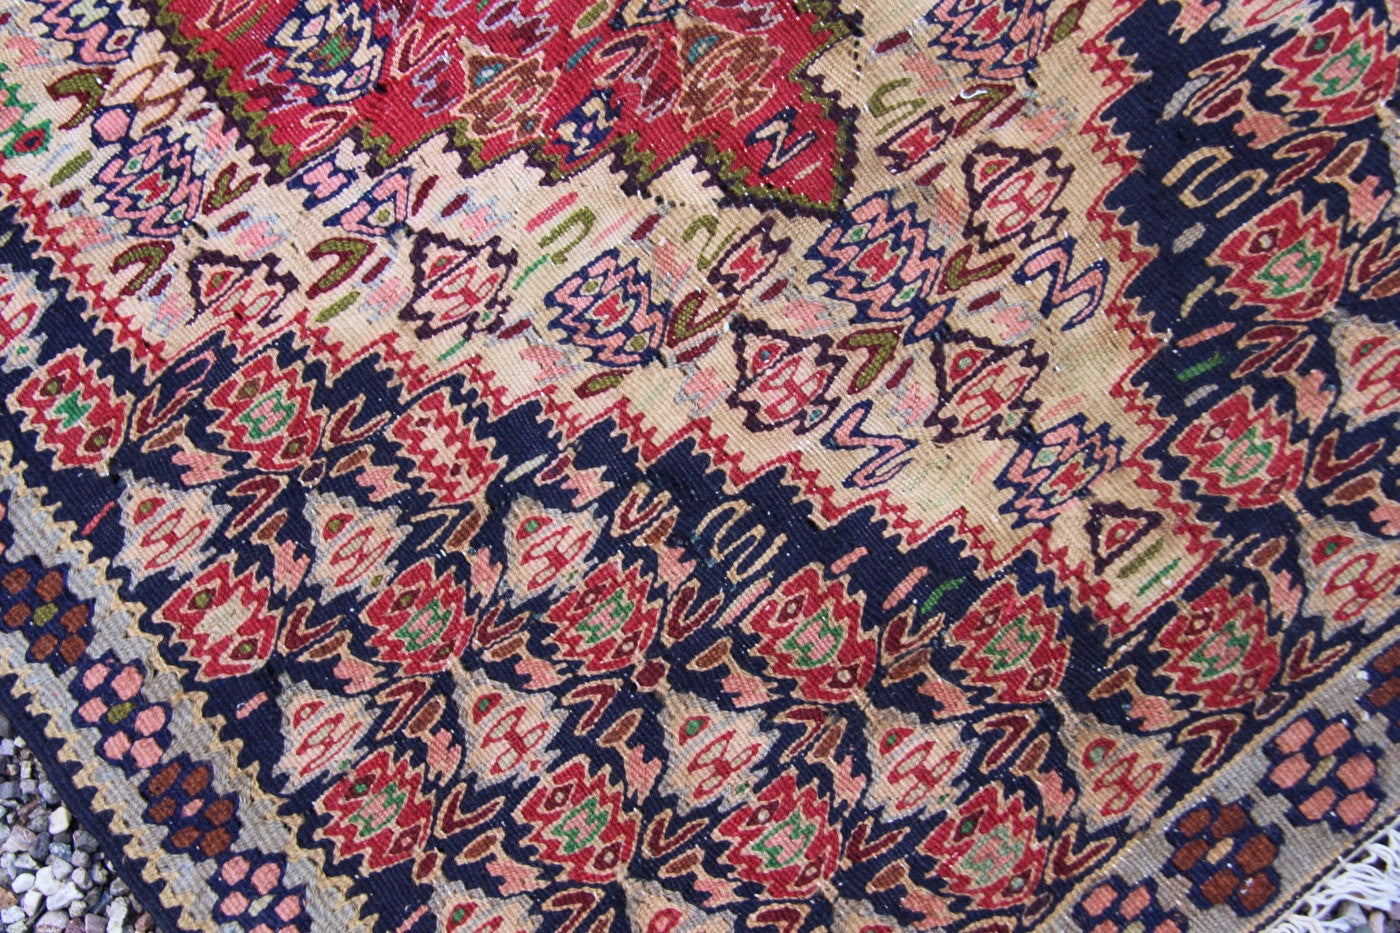 Vintage Persian Kilim Area Rug, Senneh Design, Hand Woven, 2'6" x 3'4", Excellent Condition, Wool, Boho, Tribal, Global Home Decor - ShopWomanShopsWorld.com. Bone Beads, Tassels, Pom Poms, African Beads.